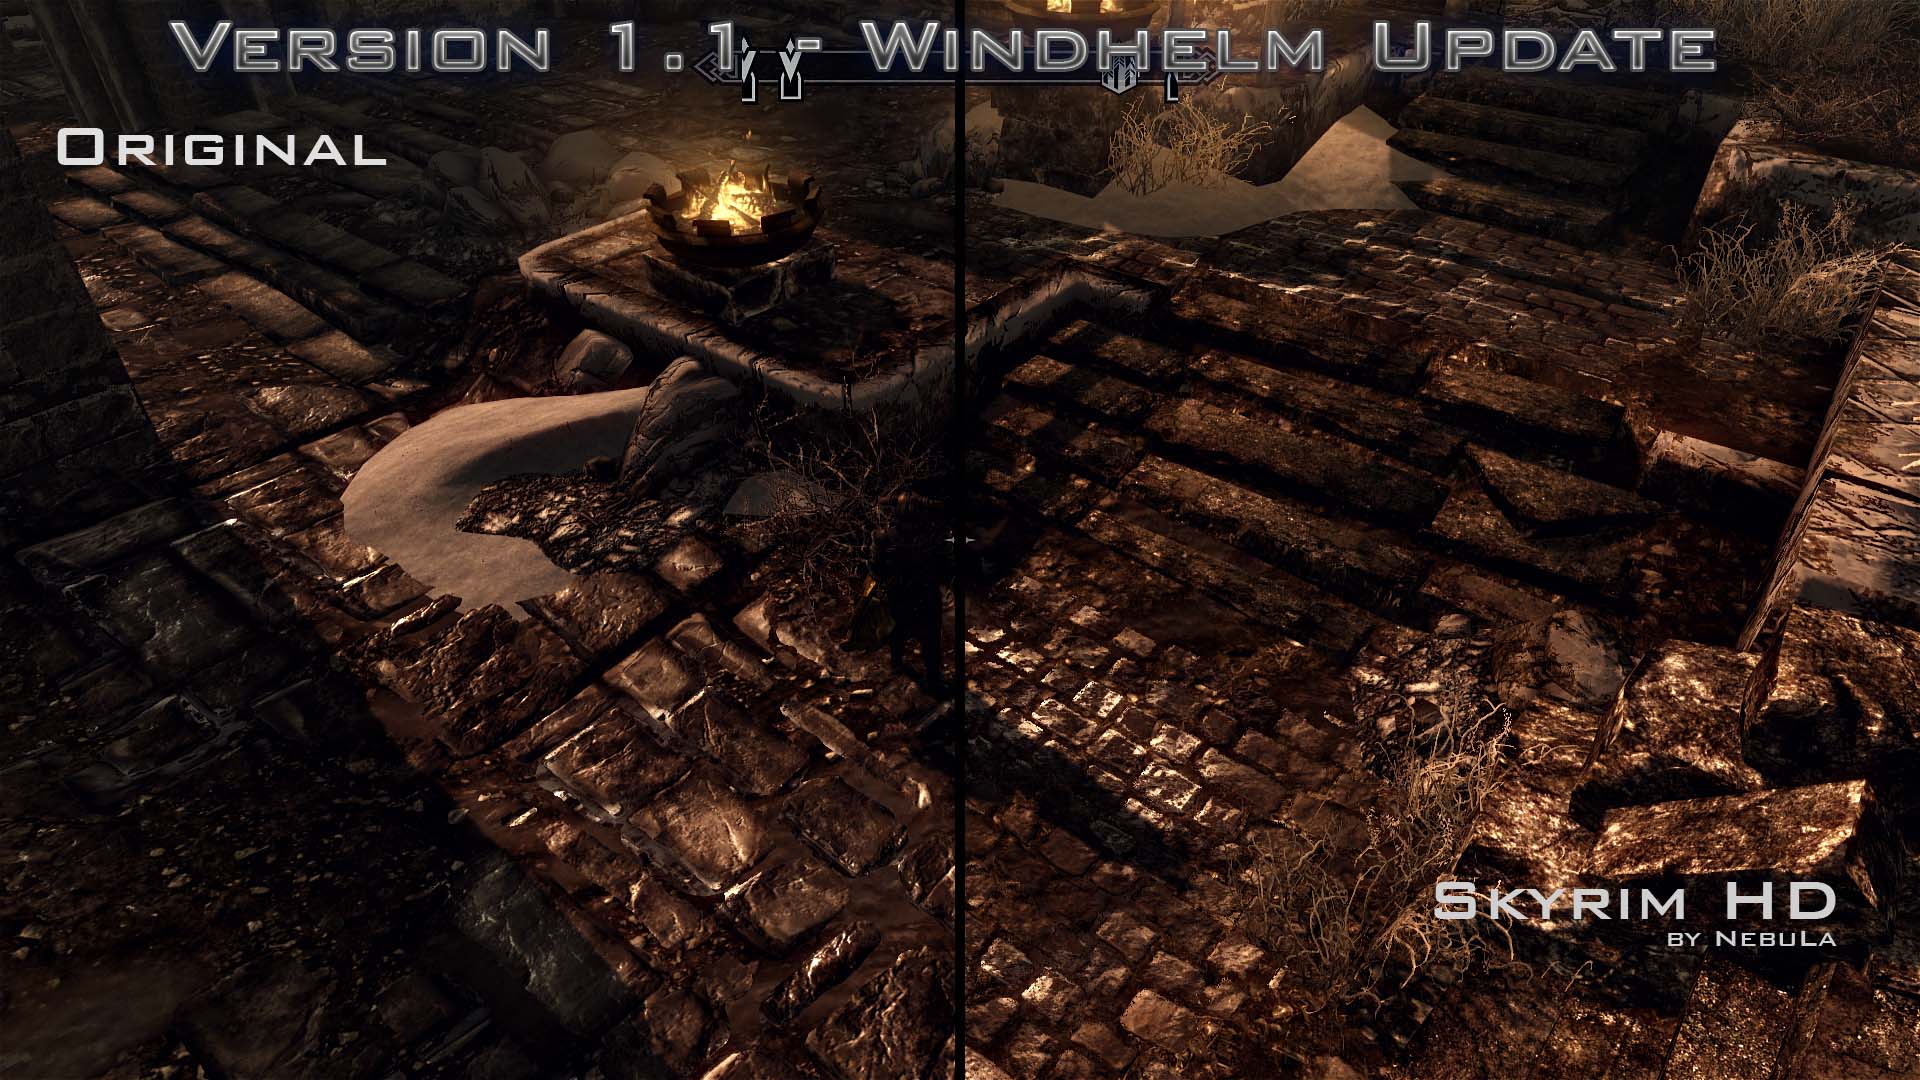 Skyrim HD 2k Textures Mod v14 The Elder Scrolls V